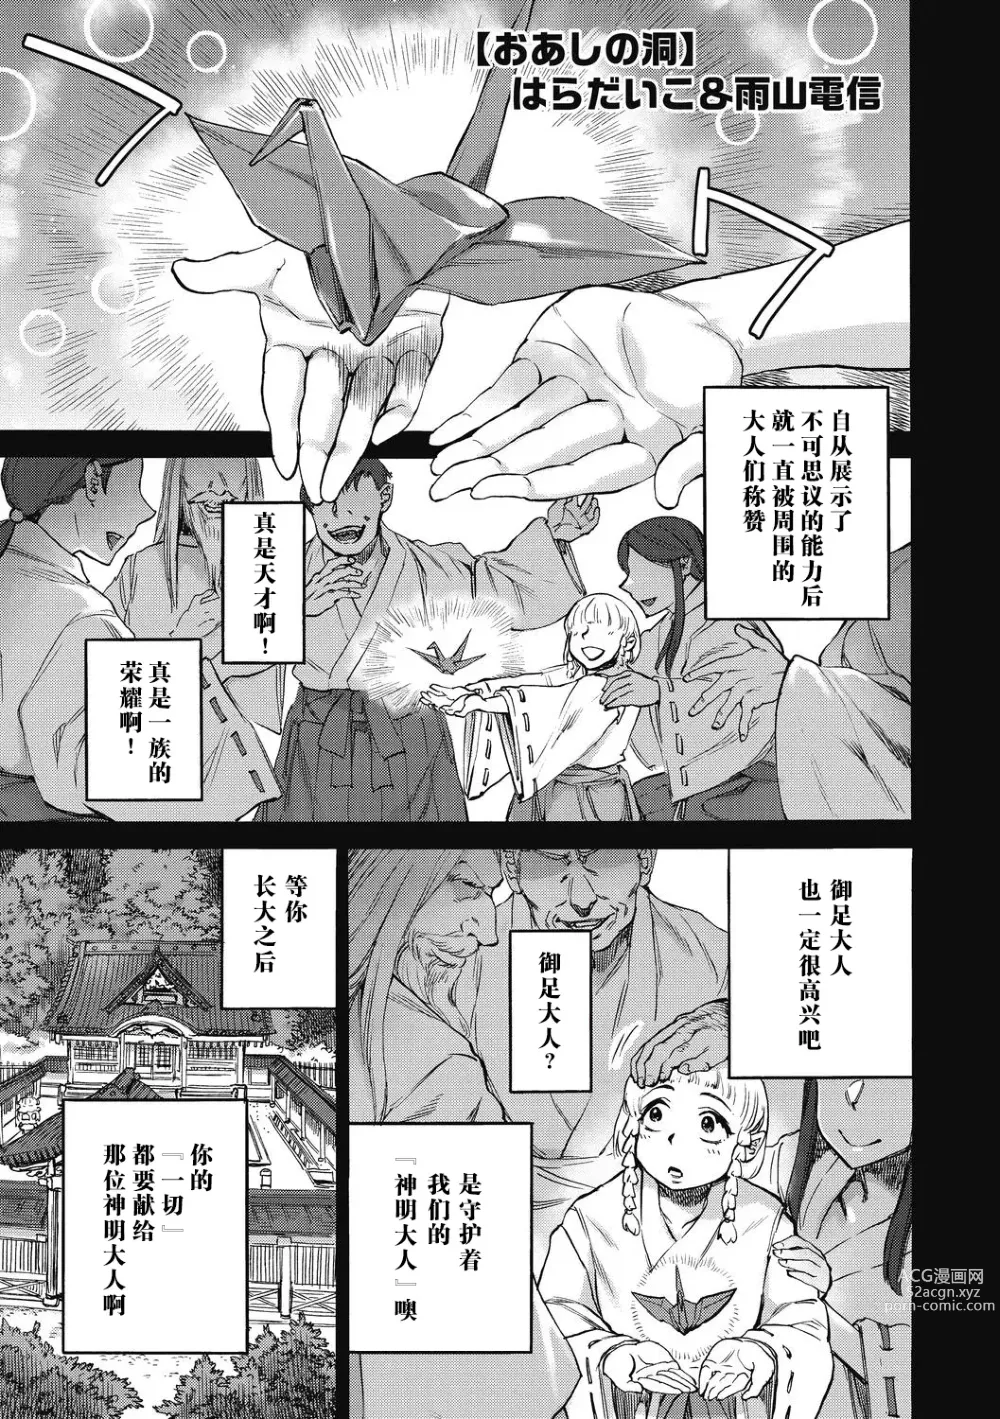 Page 2 of manga 御足大人的洞穴